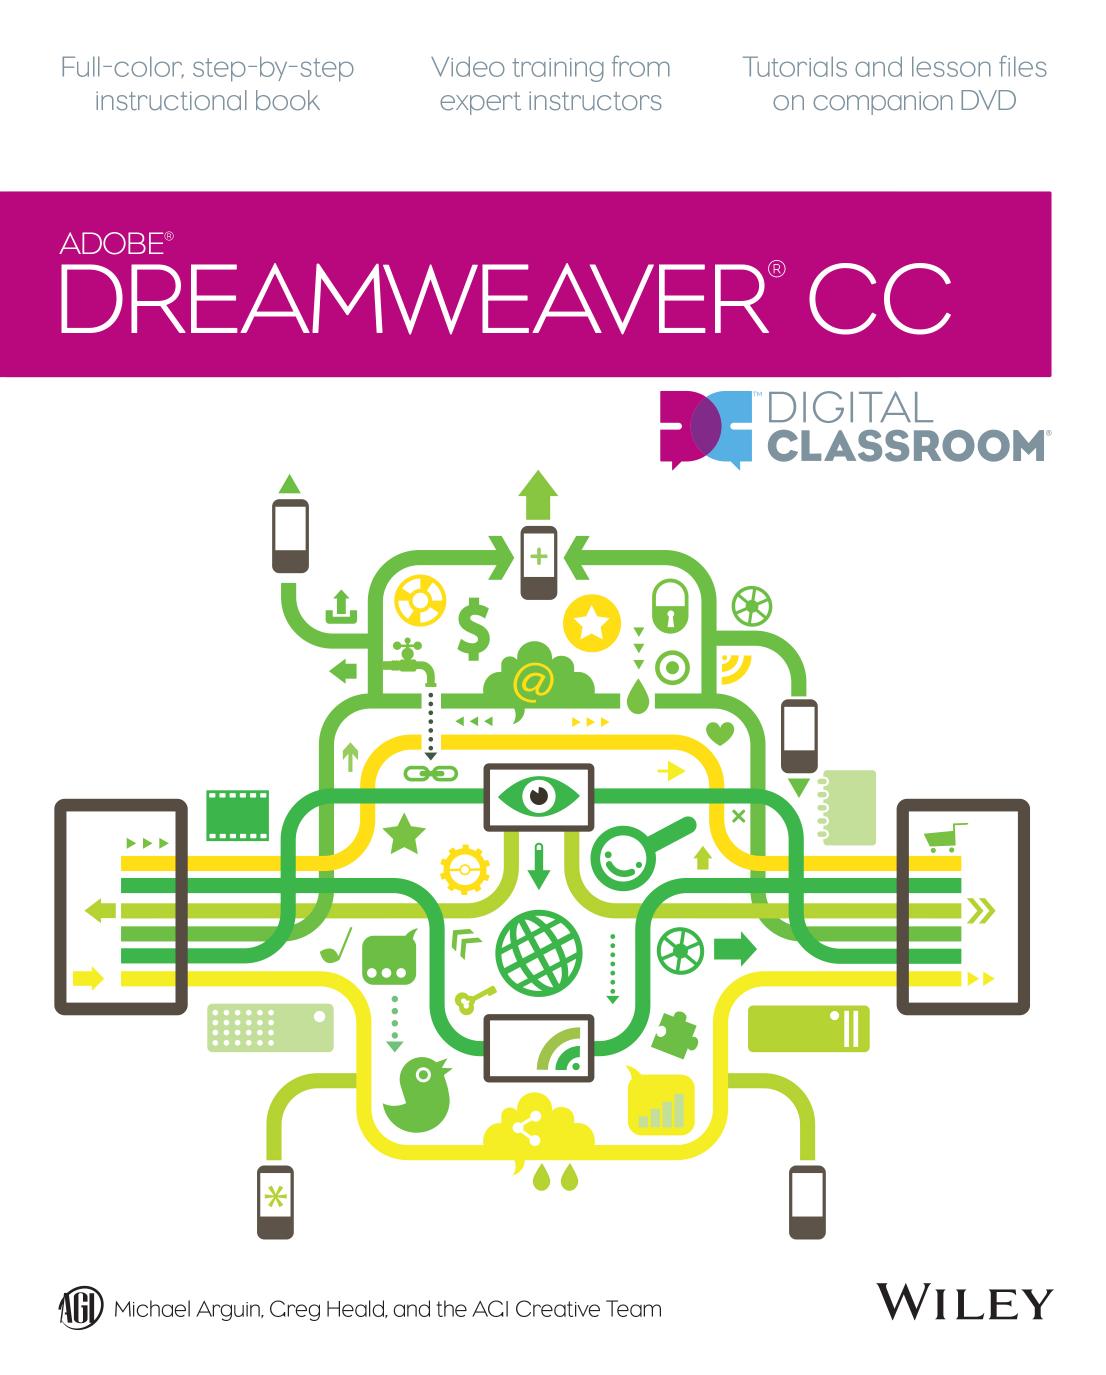 Dreamweaver CC Digital Classroom.jpg